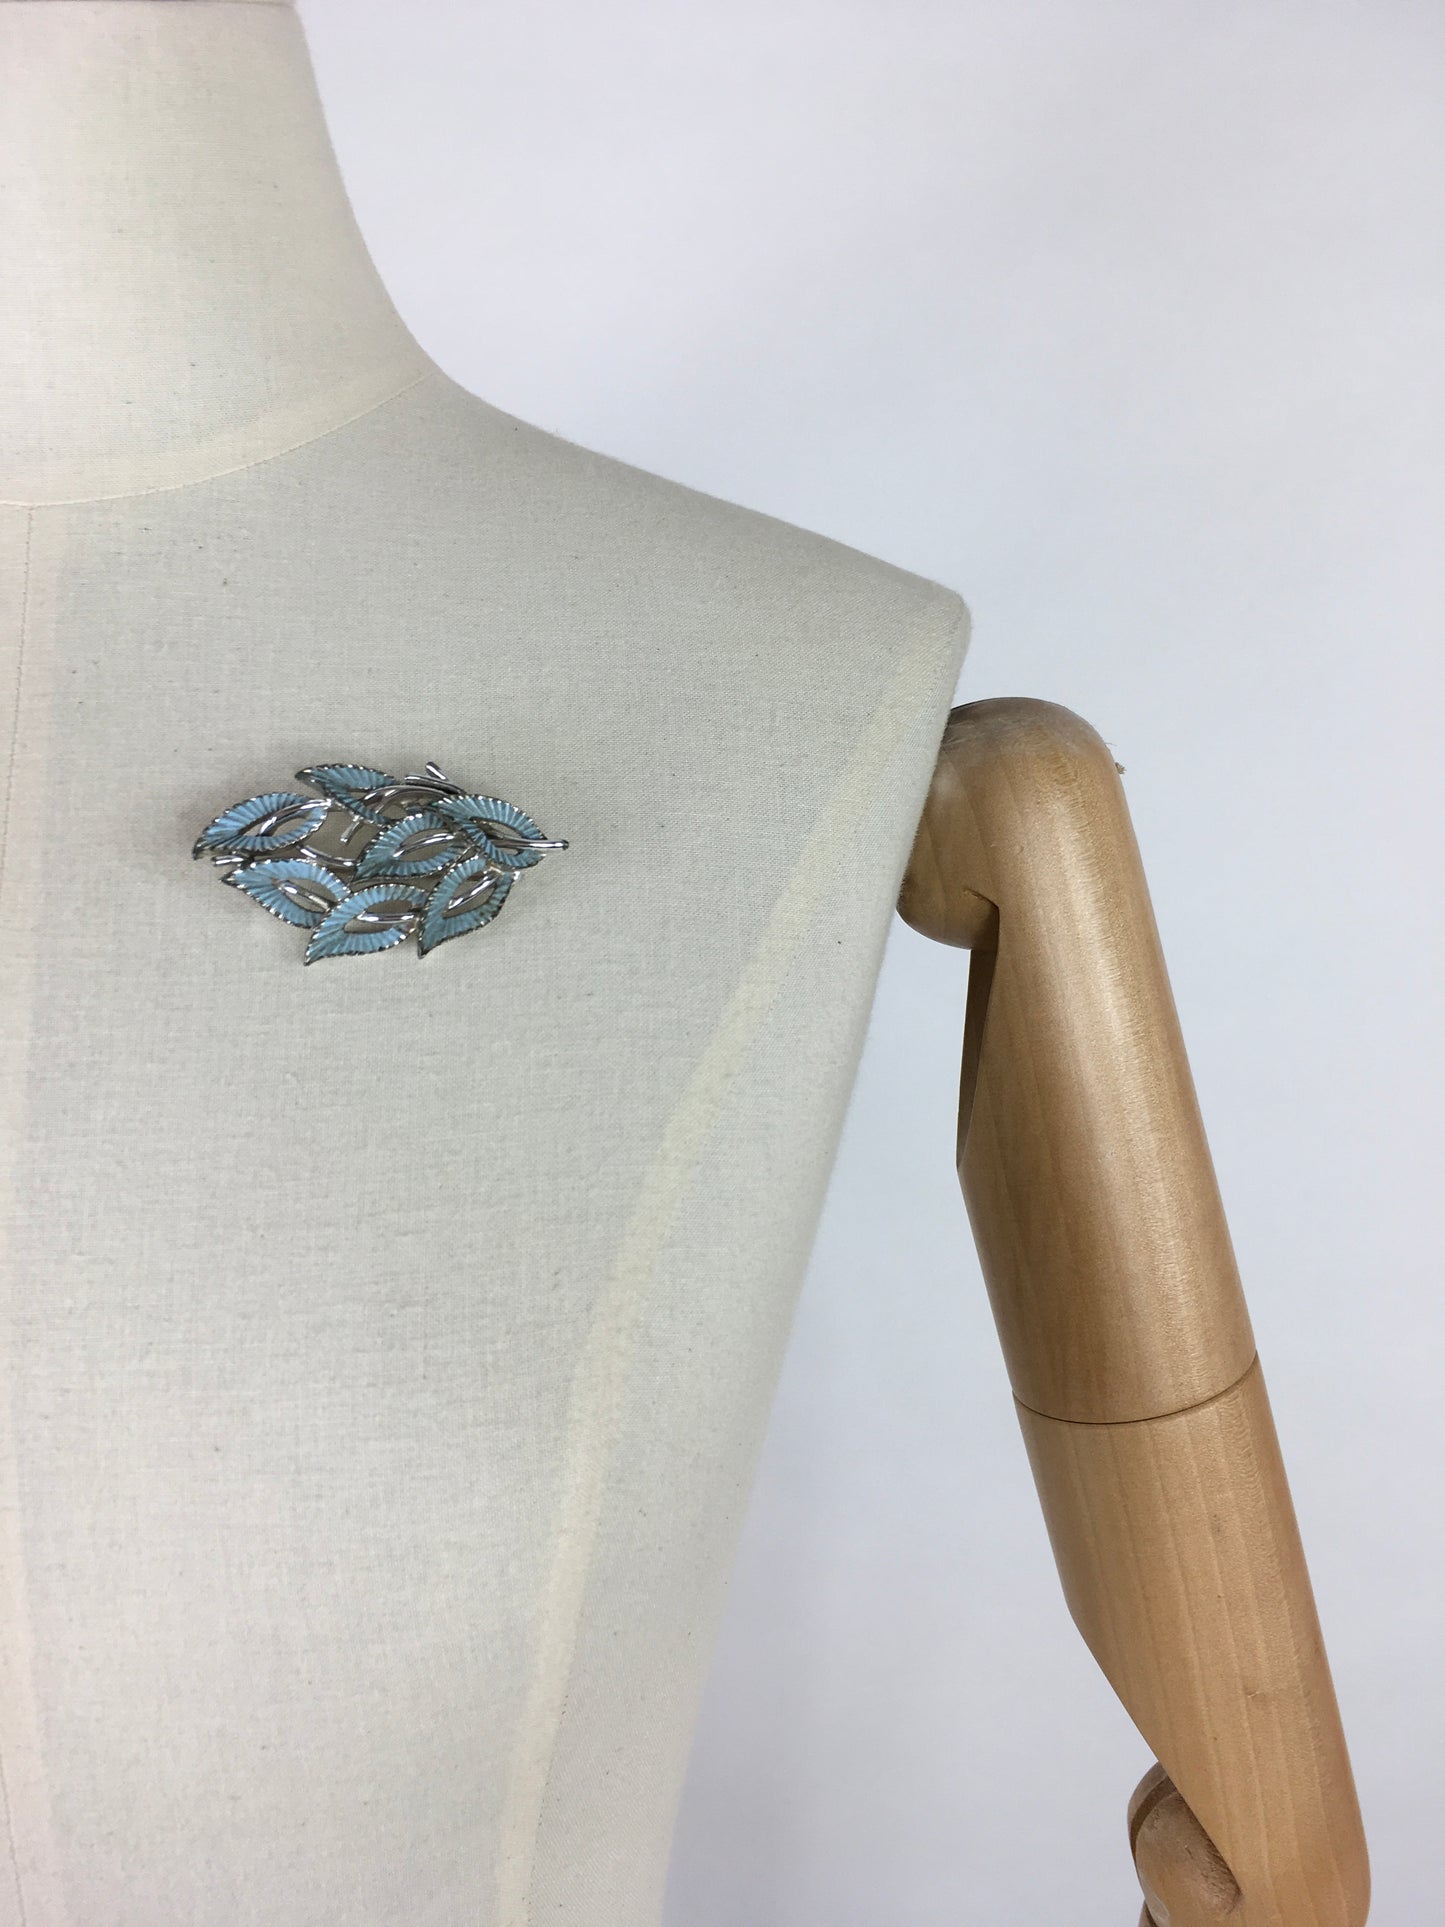 Original 1950s Powder Blue Brooch - Fabulous Shaped Piece of Costume Jewellery